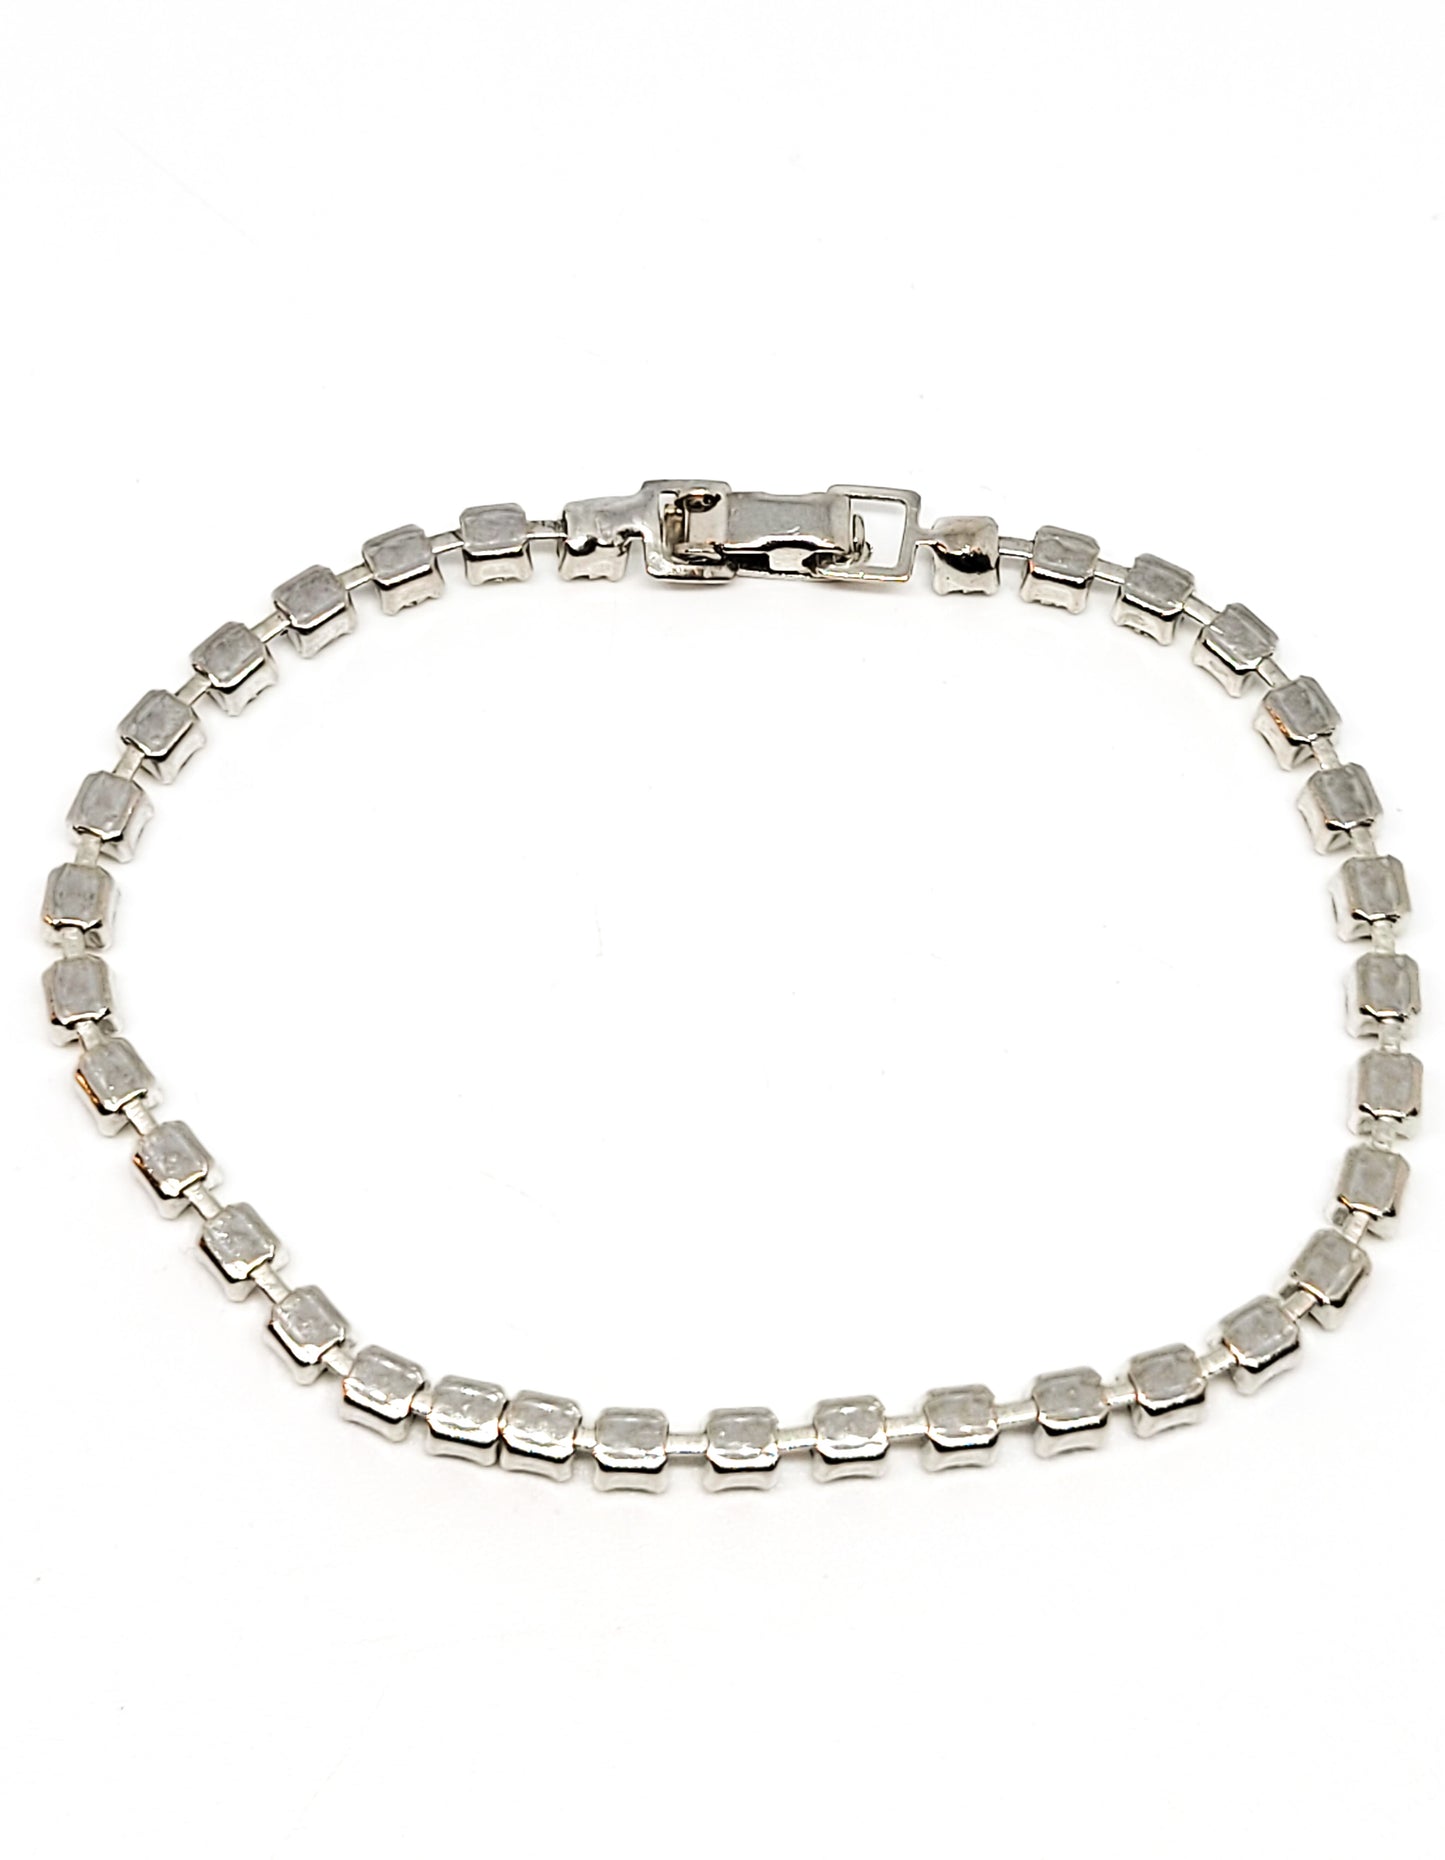 Thin clear vintage rhinestone chaton mid century tennis bracelet minimalist